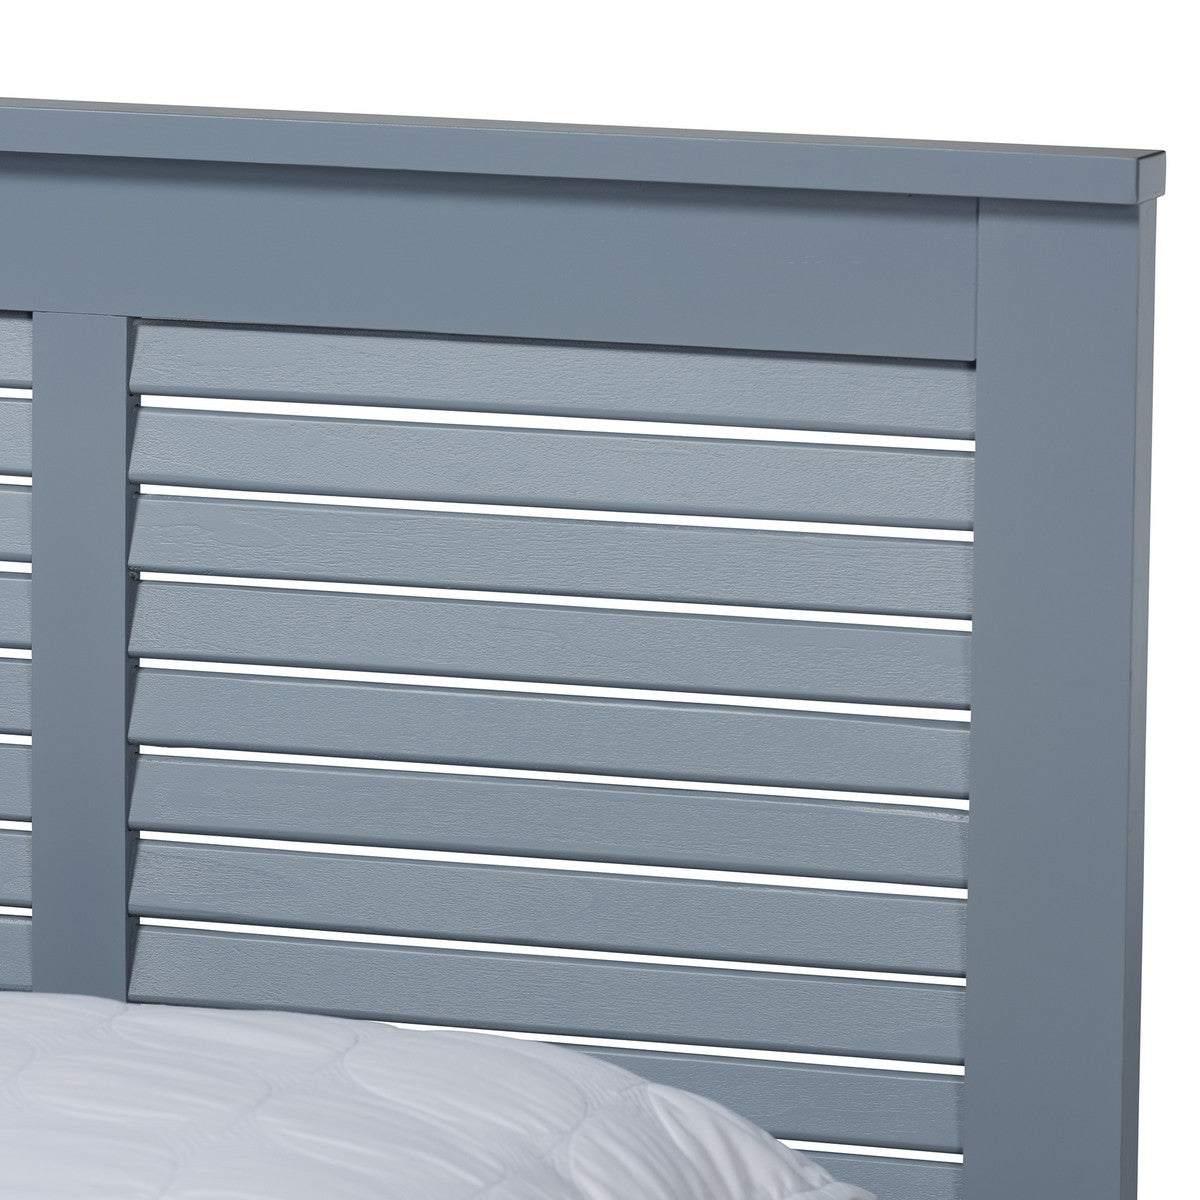 Baxton Studio Adela Modern and Contemporary Grey Finished Wood Full Size Platform Bed